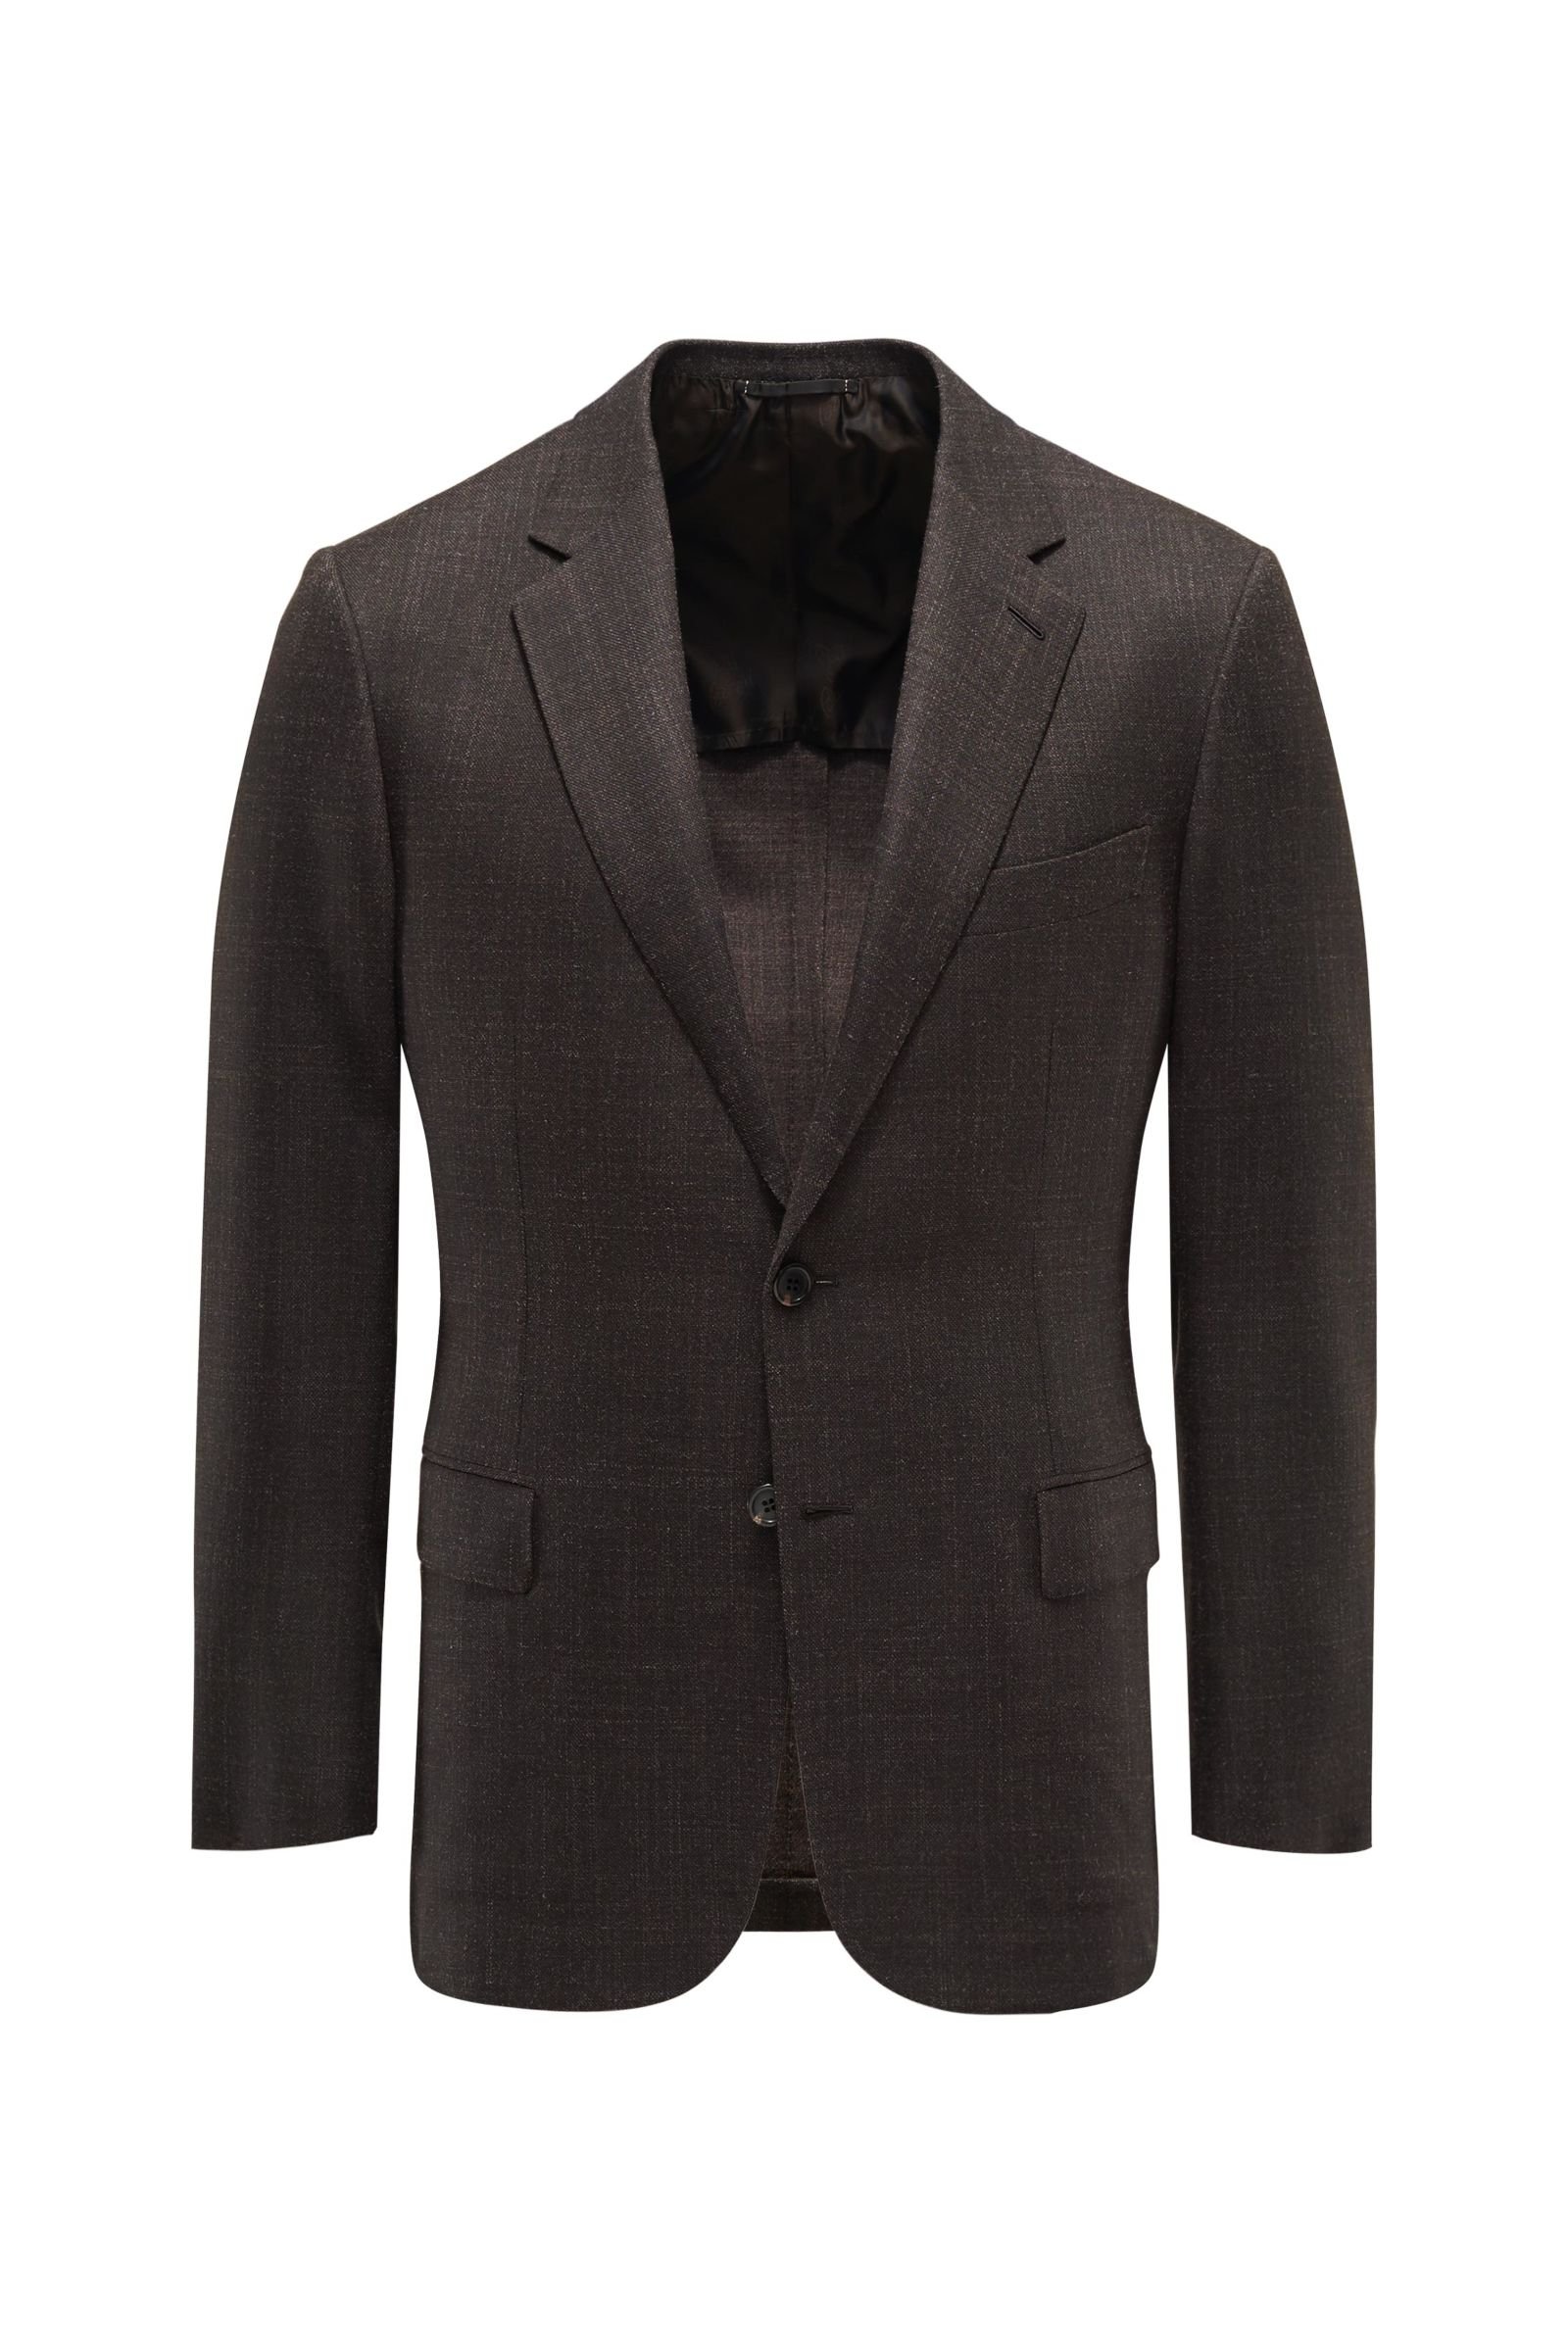 Smart-casual jacket 'Condotti' dark brown